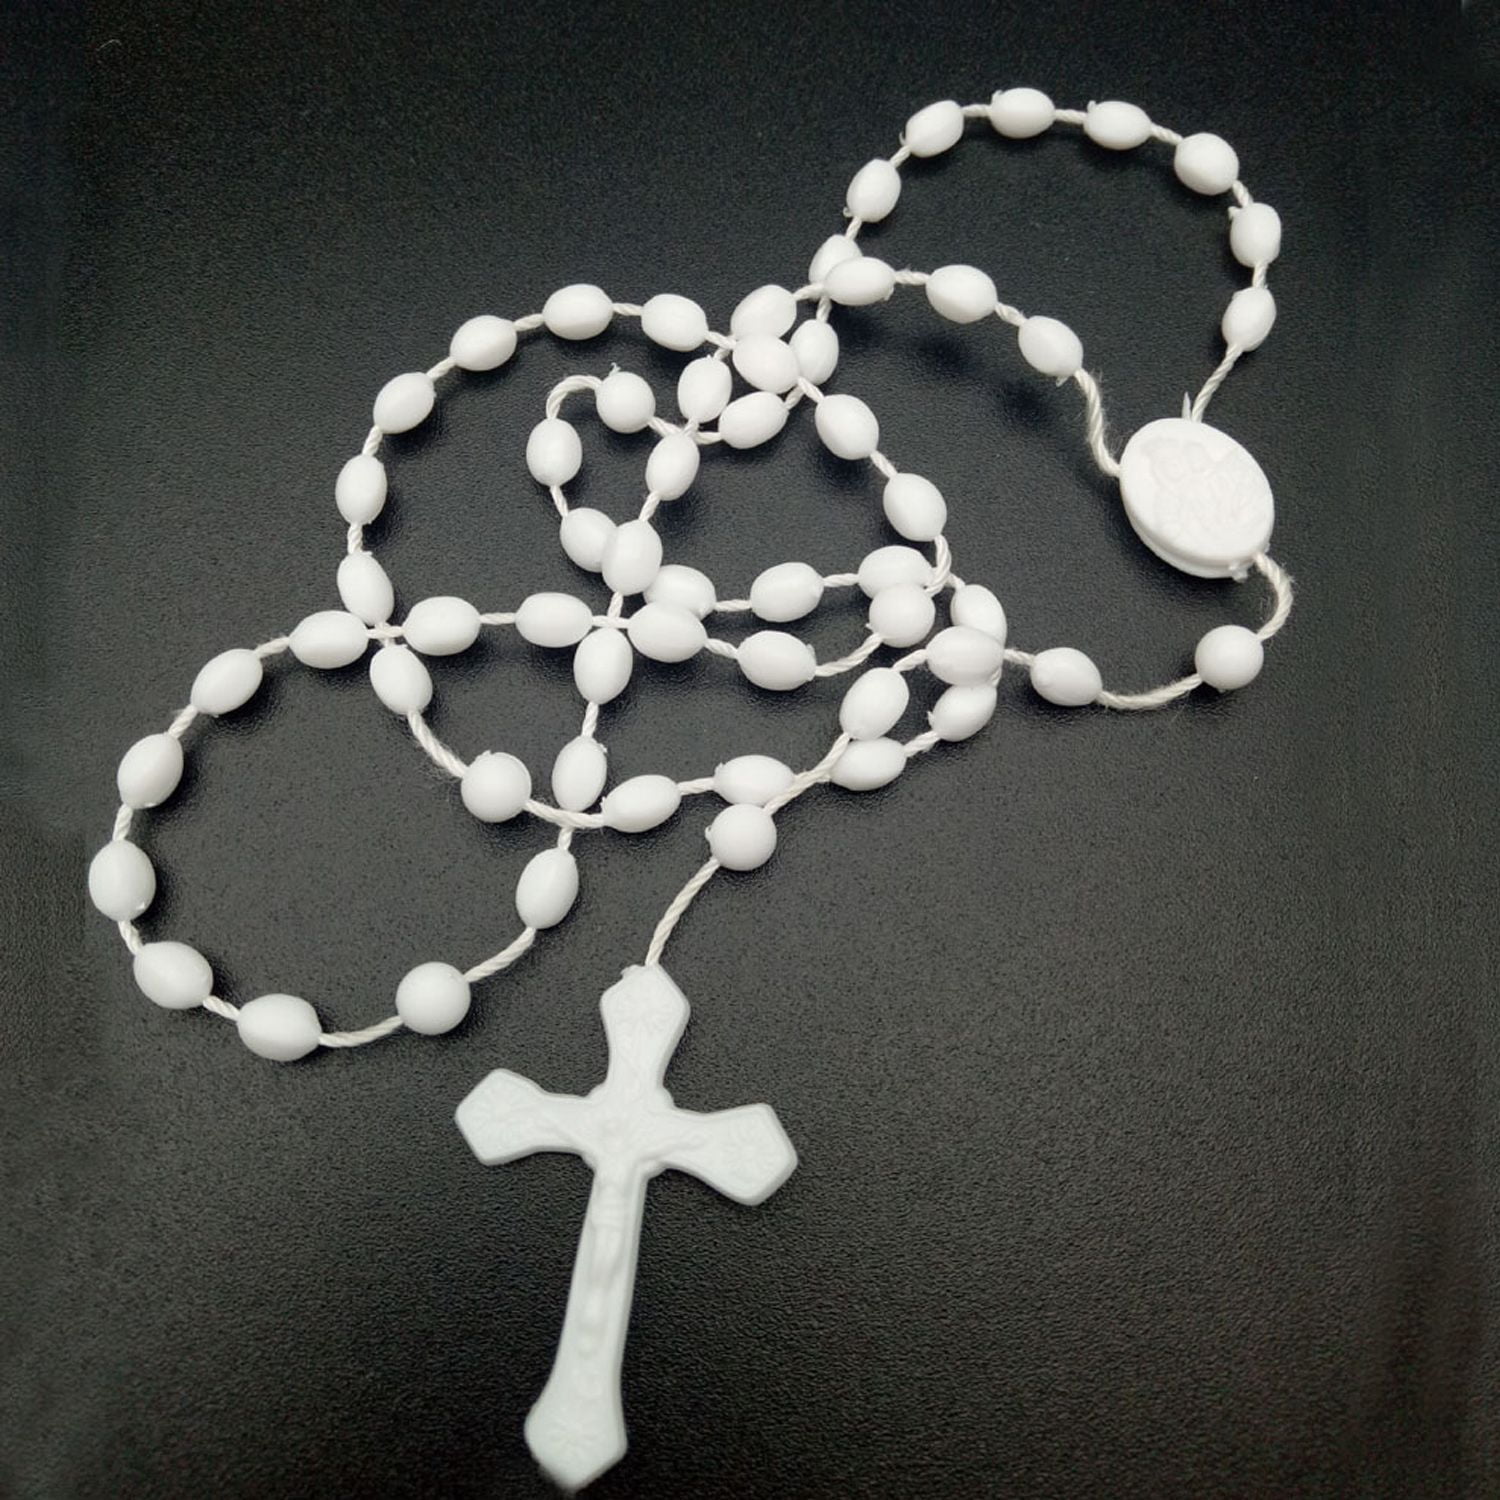 Crucifix - White plastic, 10 pcs - MXW [MXWx10] - $0.66 USD : Ave Marias  Circle, Rosary Making Supplies